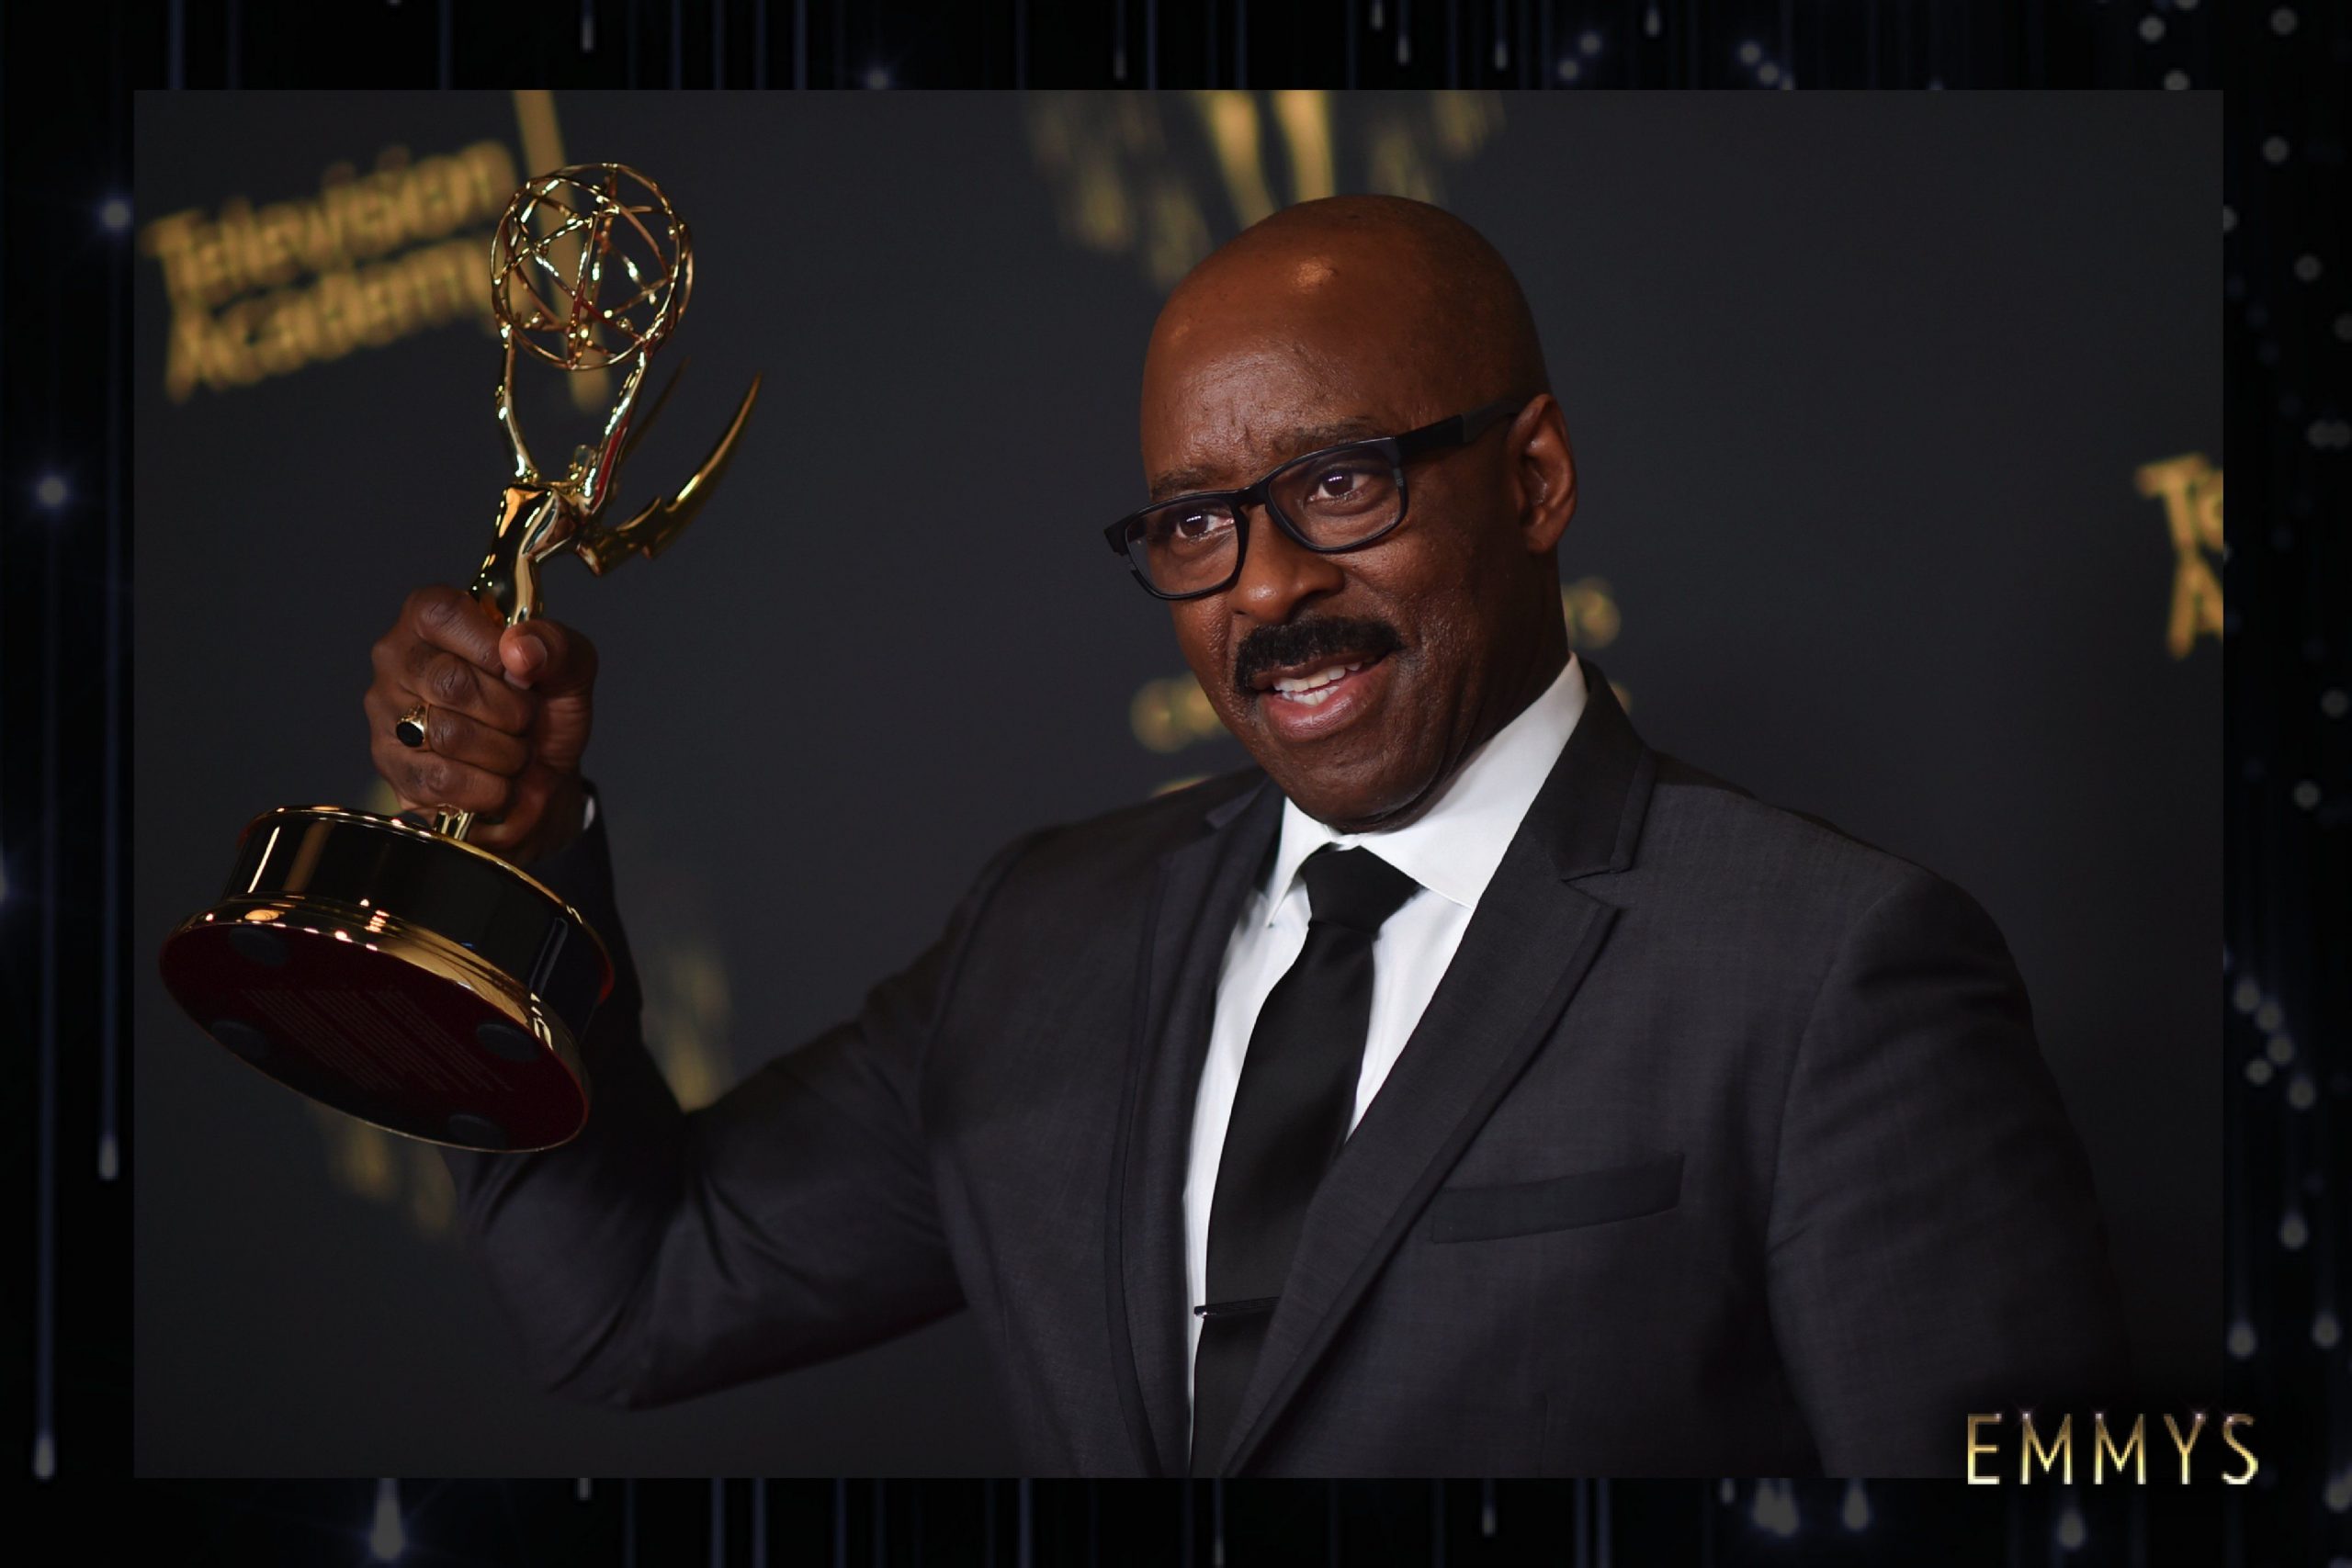 Emmy Awards 2021: Full list of nominations